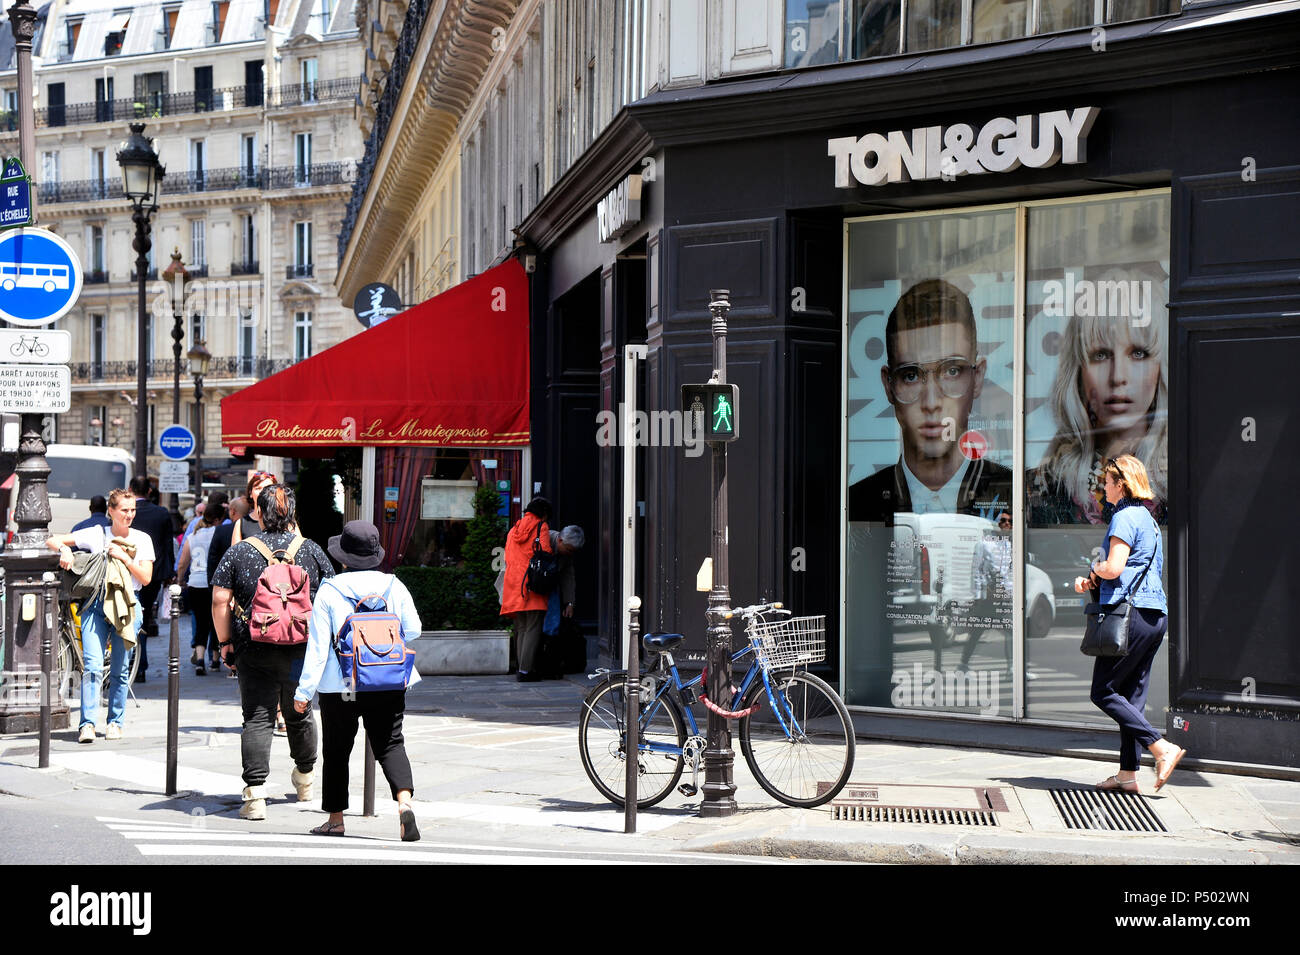 Toni & Guy hairdresser store - Paris - France Stock Photo